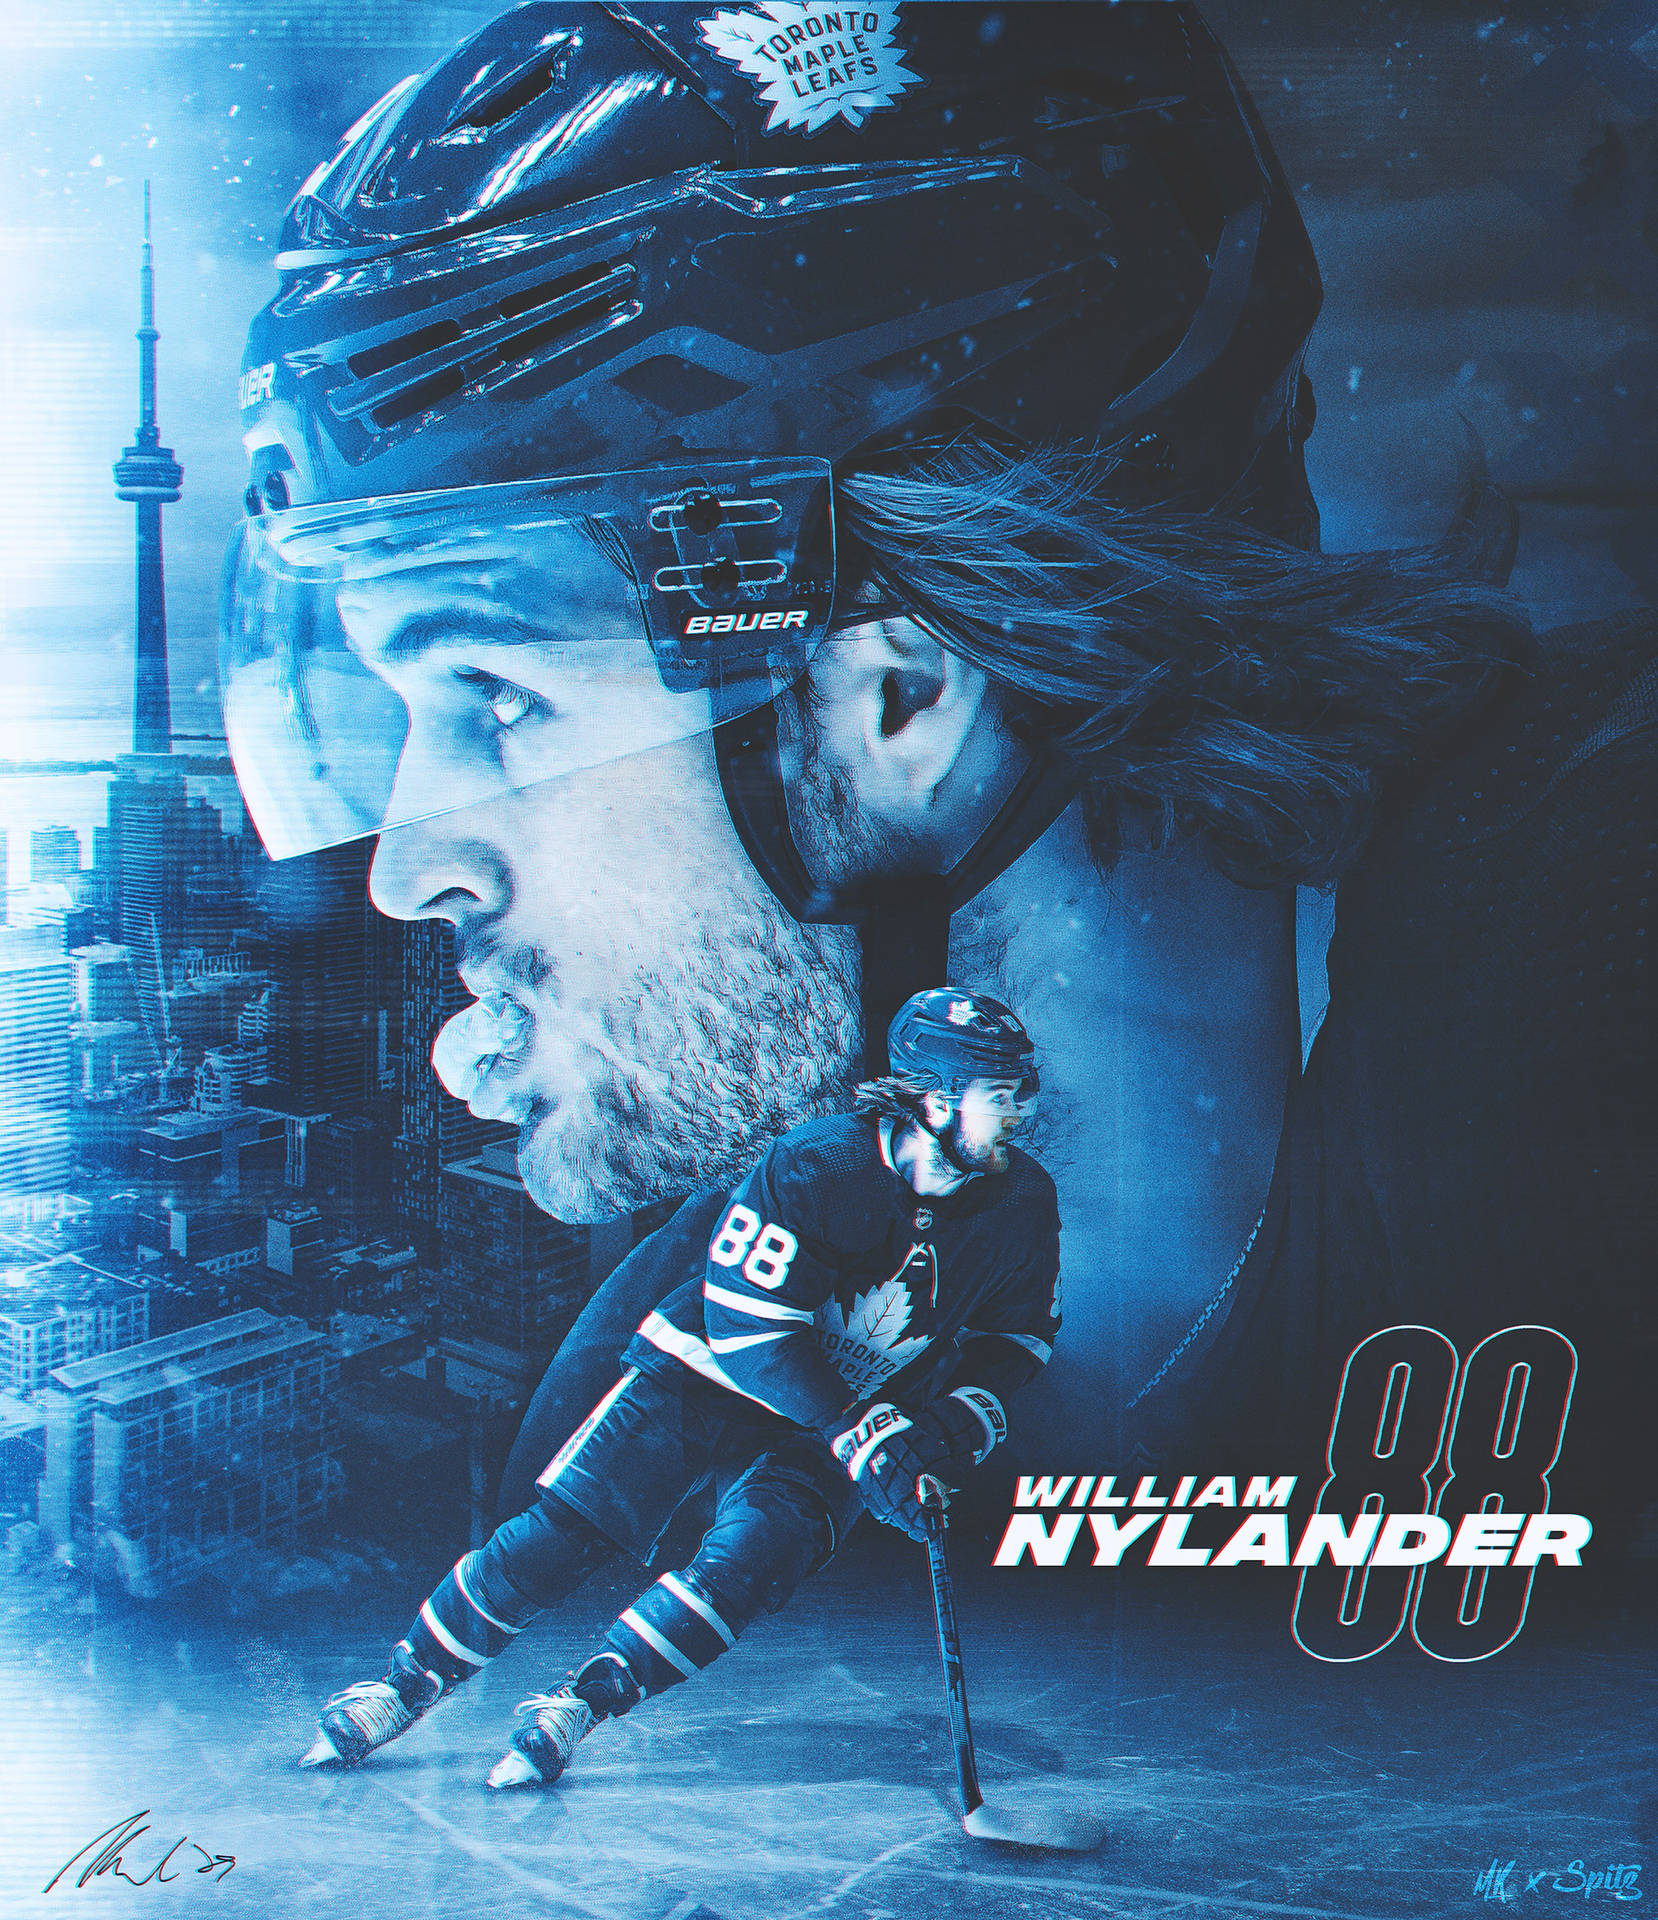 Canadian Nhl Player William Nylander Poster Wallpaper